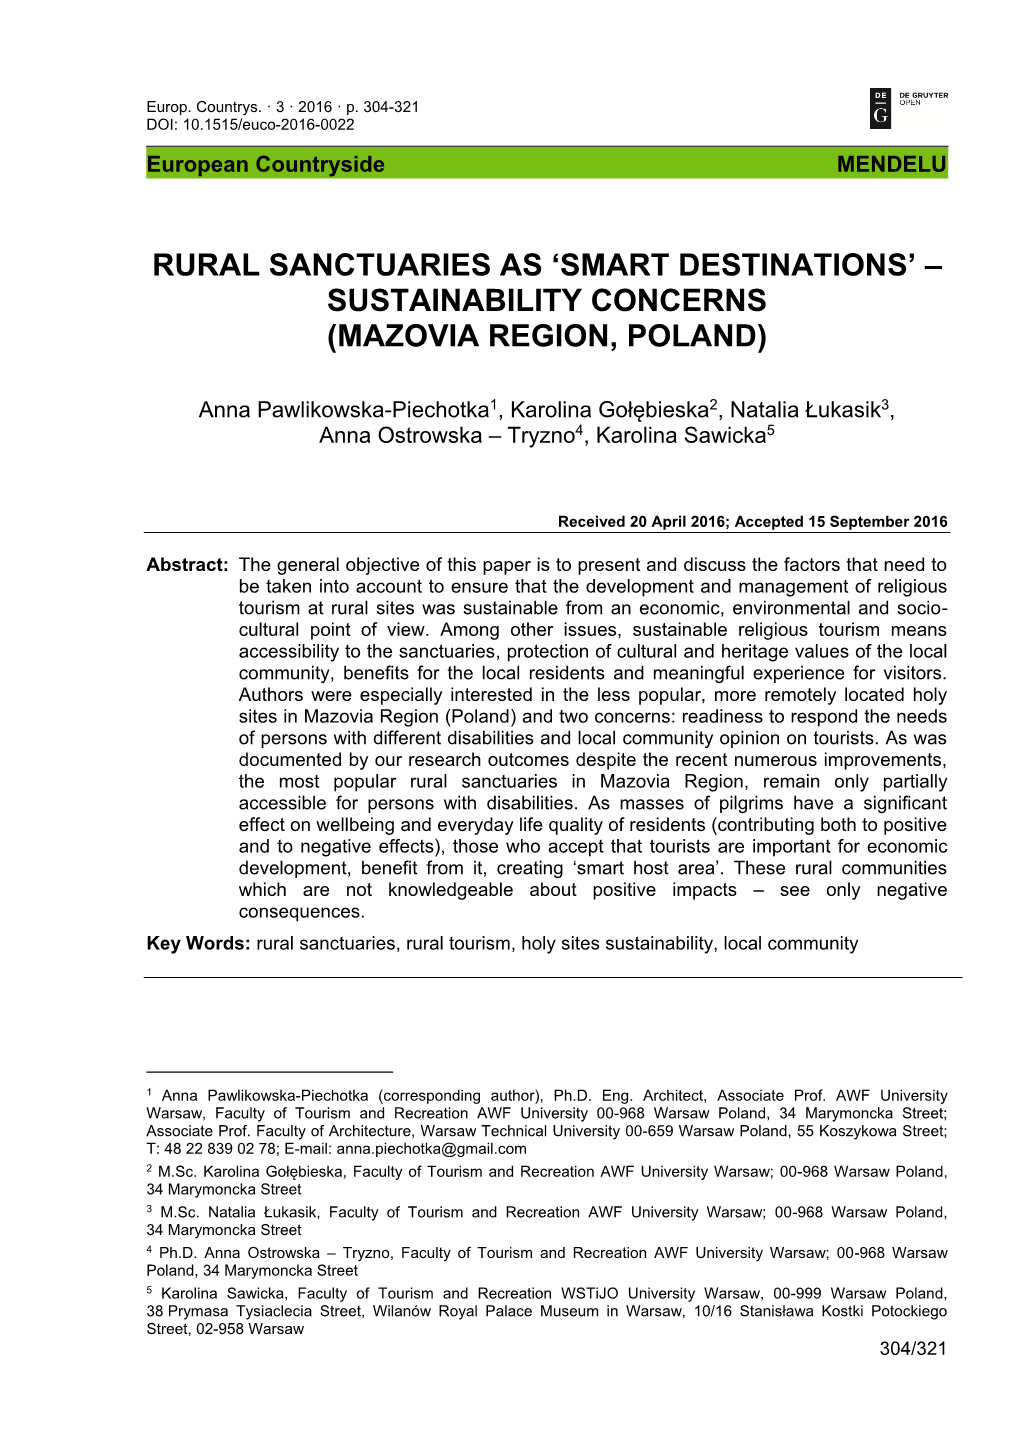 Rural Sanctuaries As ‘Smart Destinations’ – Sustainability Concerns (Mazovia Region, Poland)